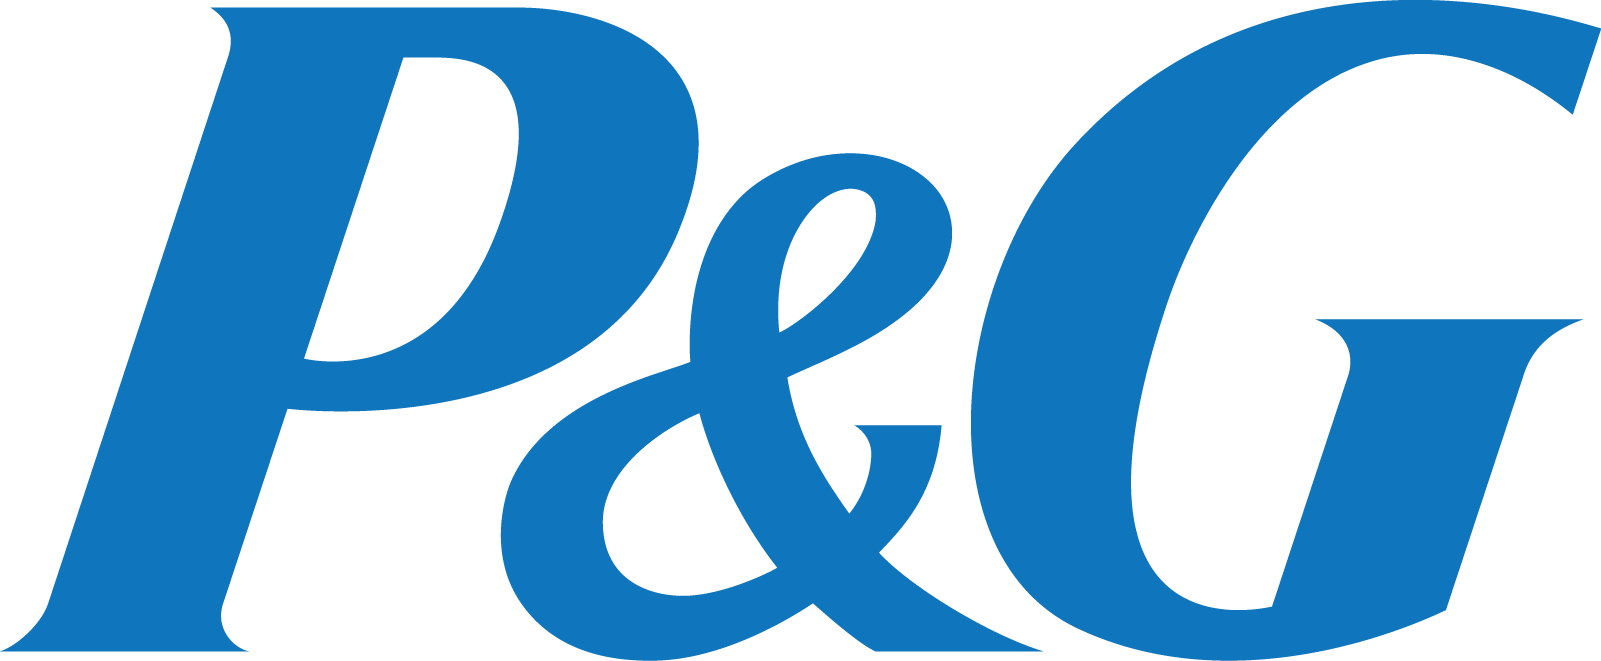 E. Procter & Gamble (Plata)